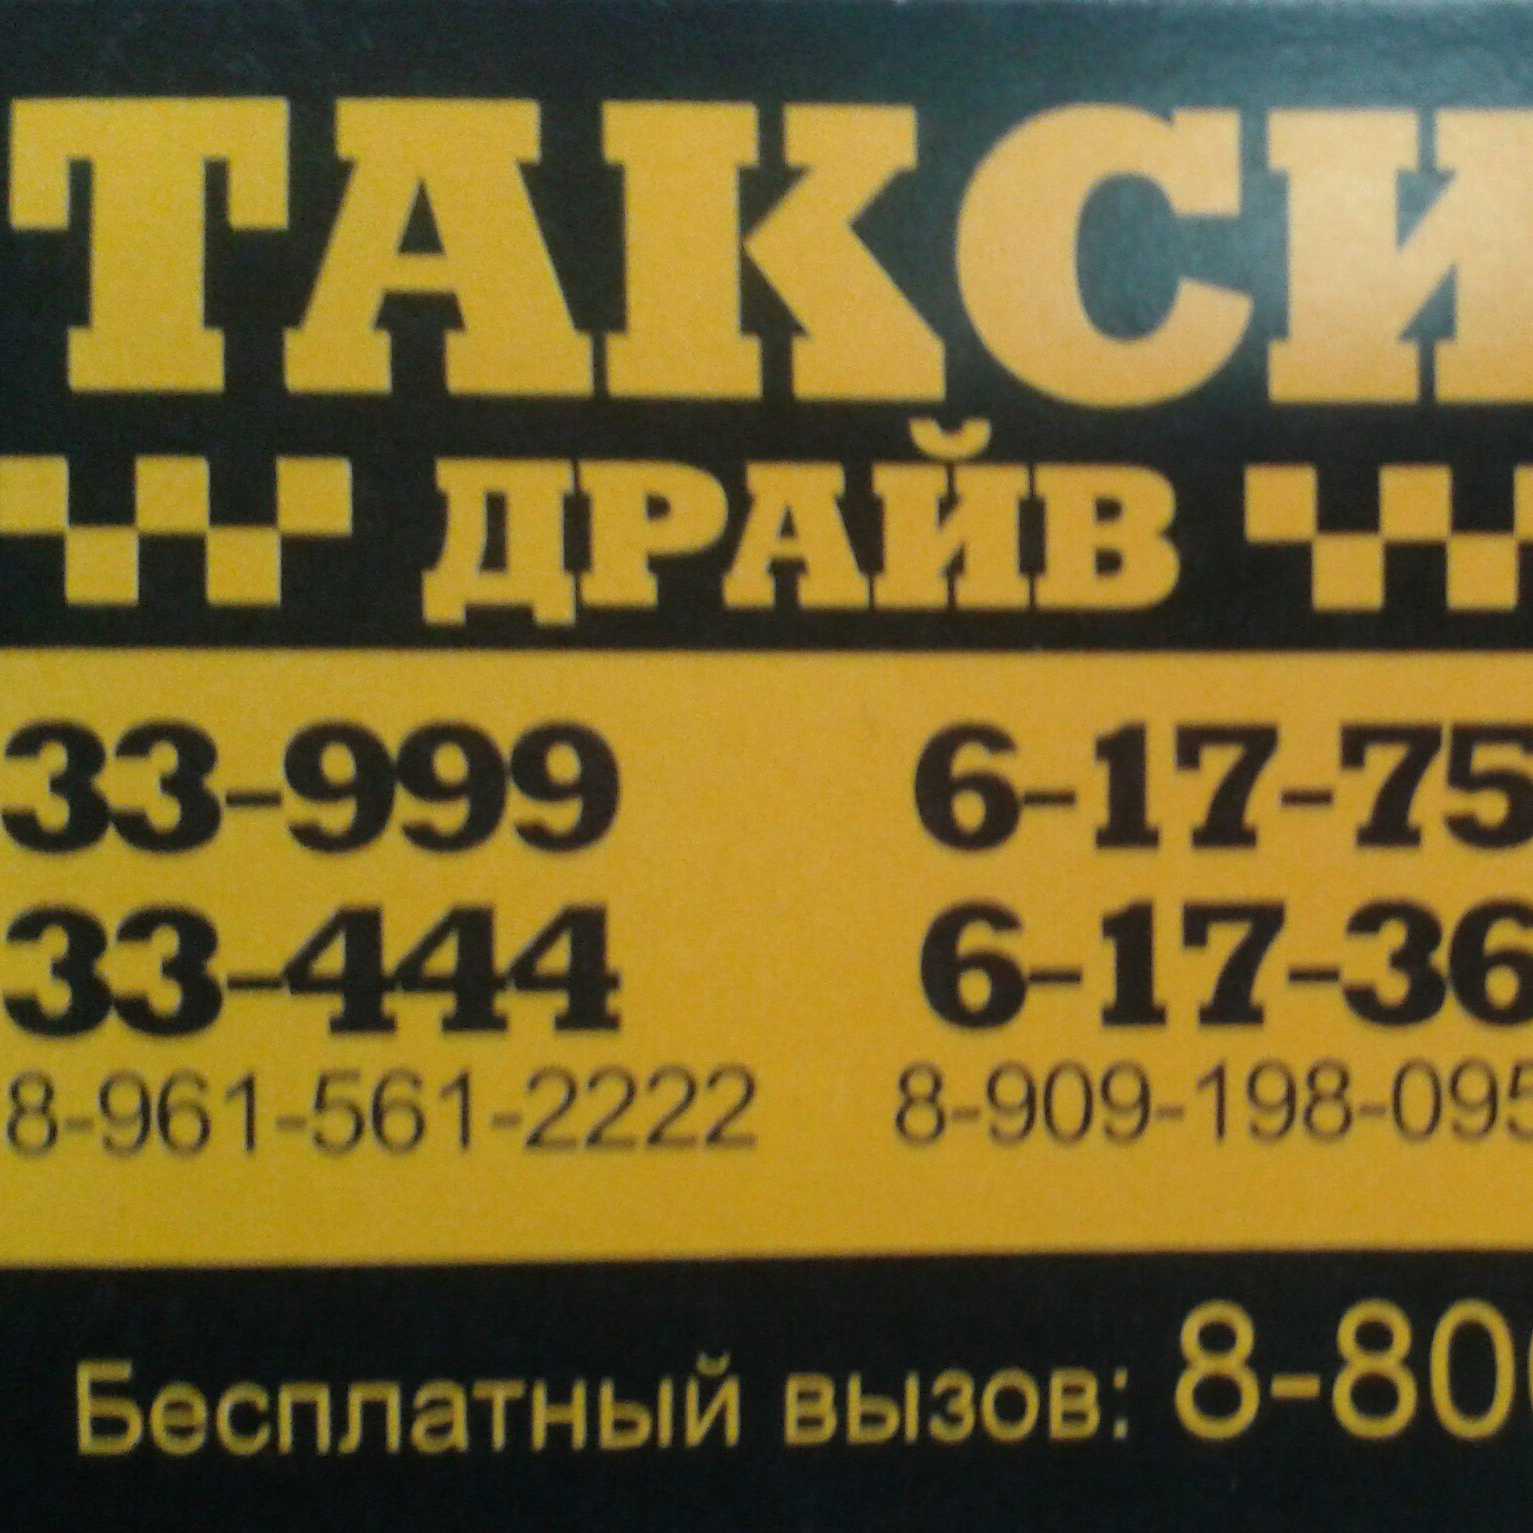 Номер телефона камчатского такси. Такси в Барде. Такси Салехард. Такси драйв барда. Такси Салехард номера.